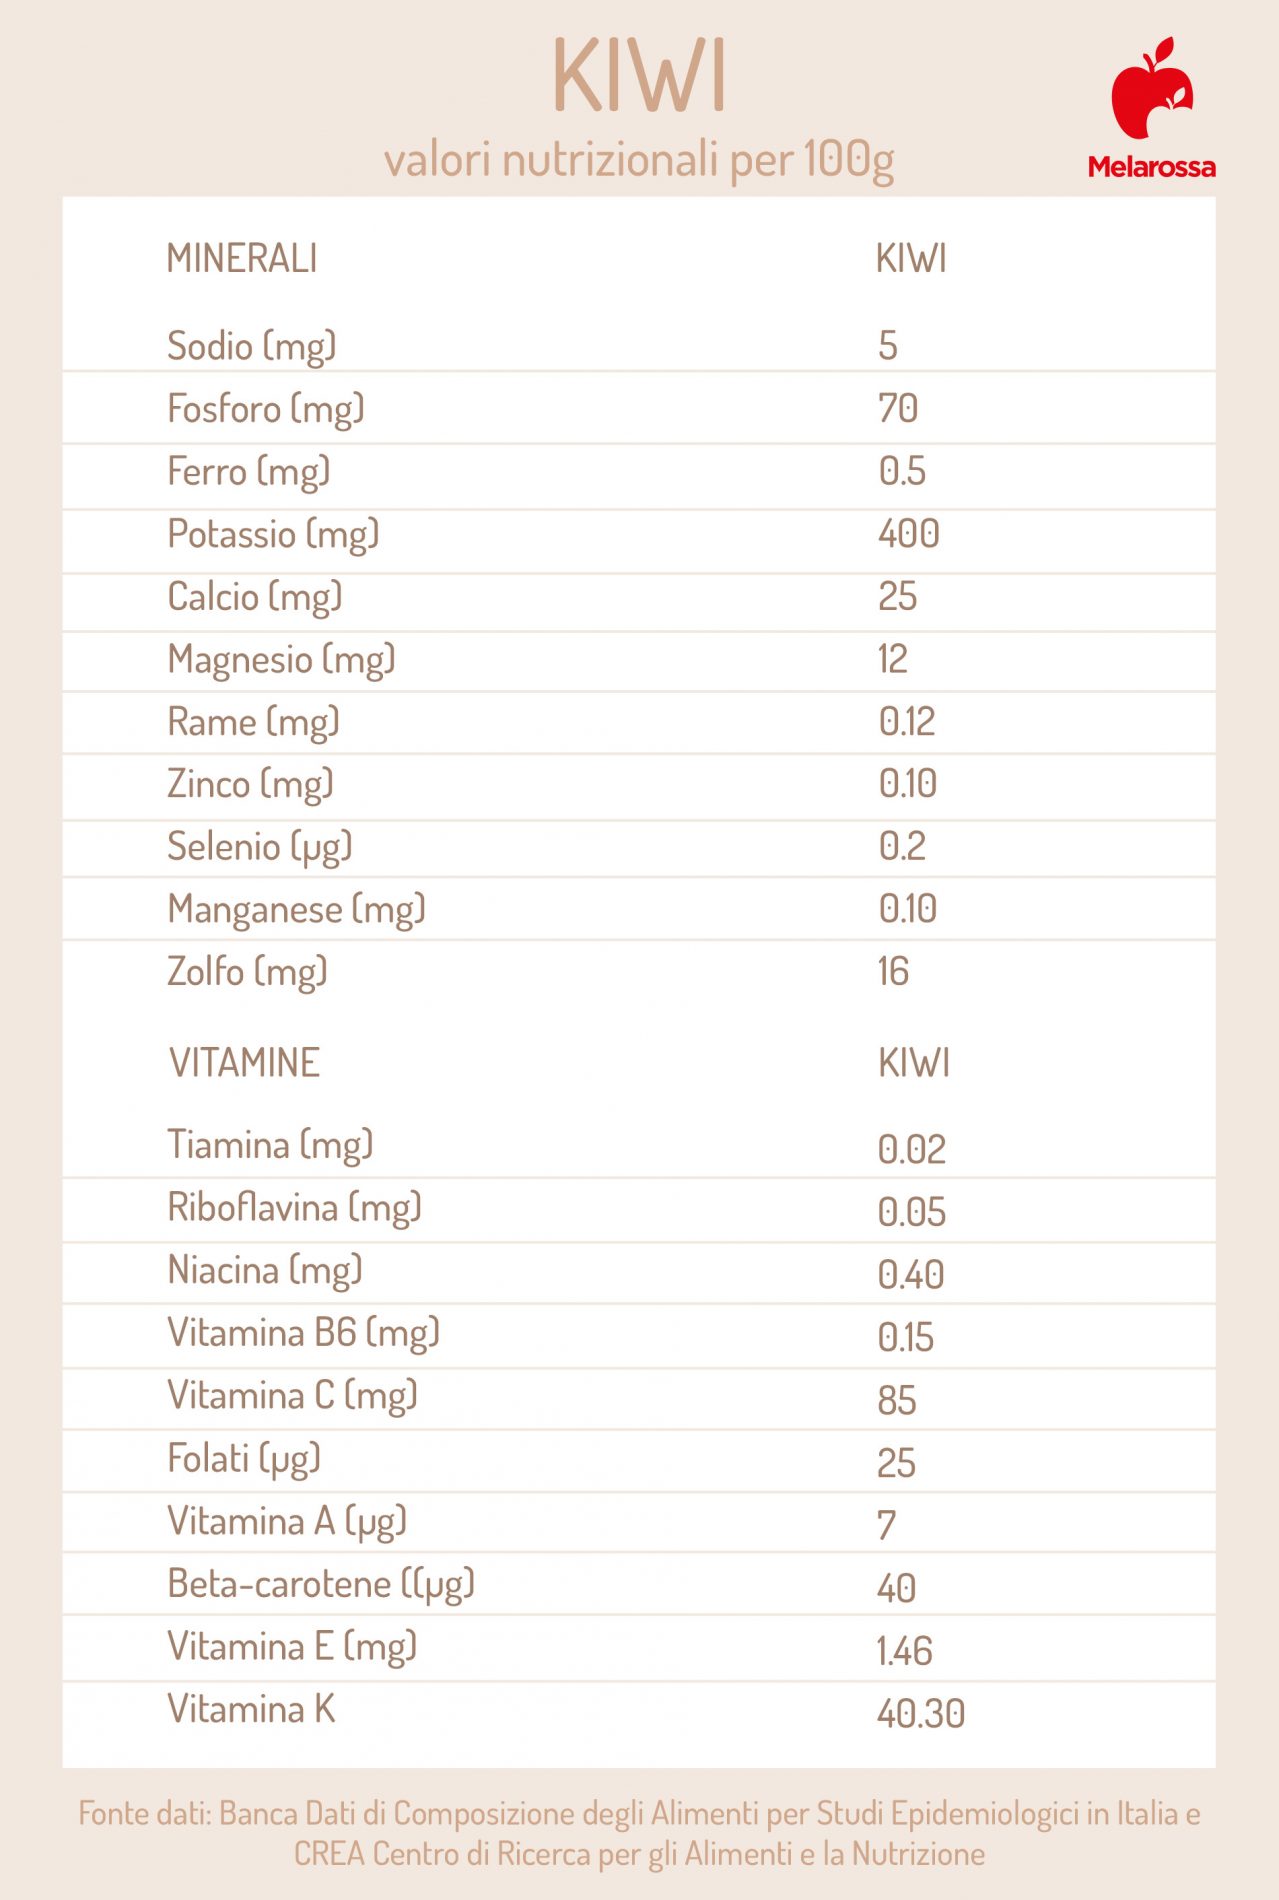 kiwi valori: nutrizionali